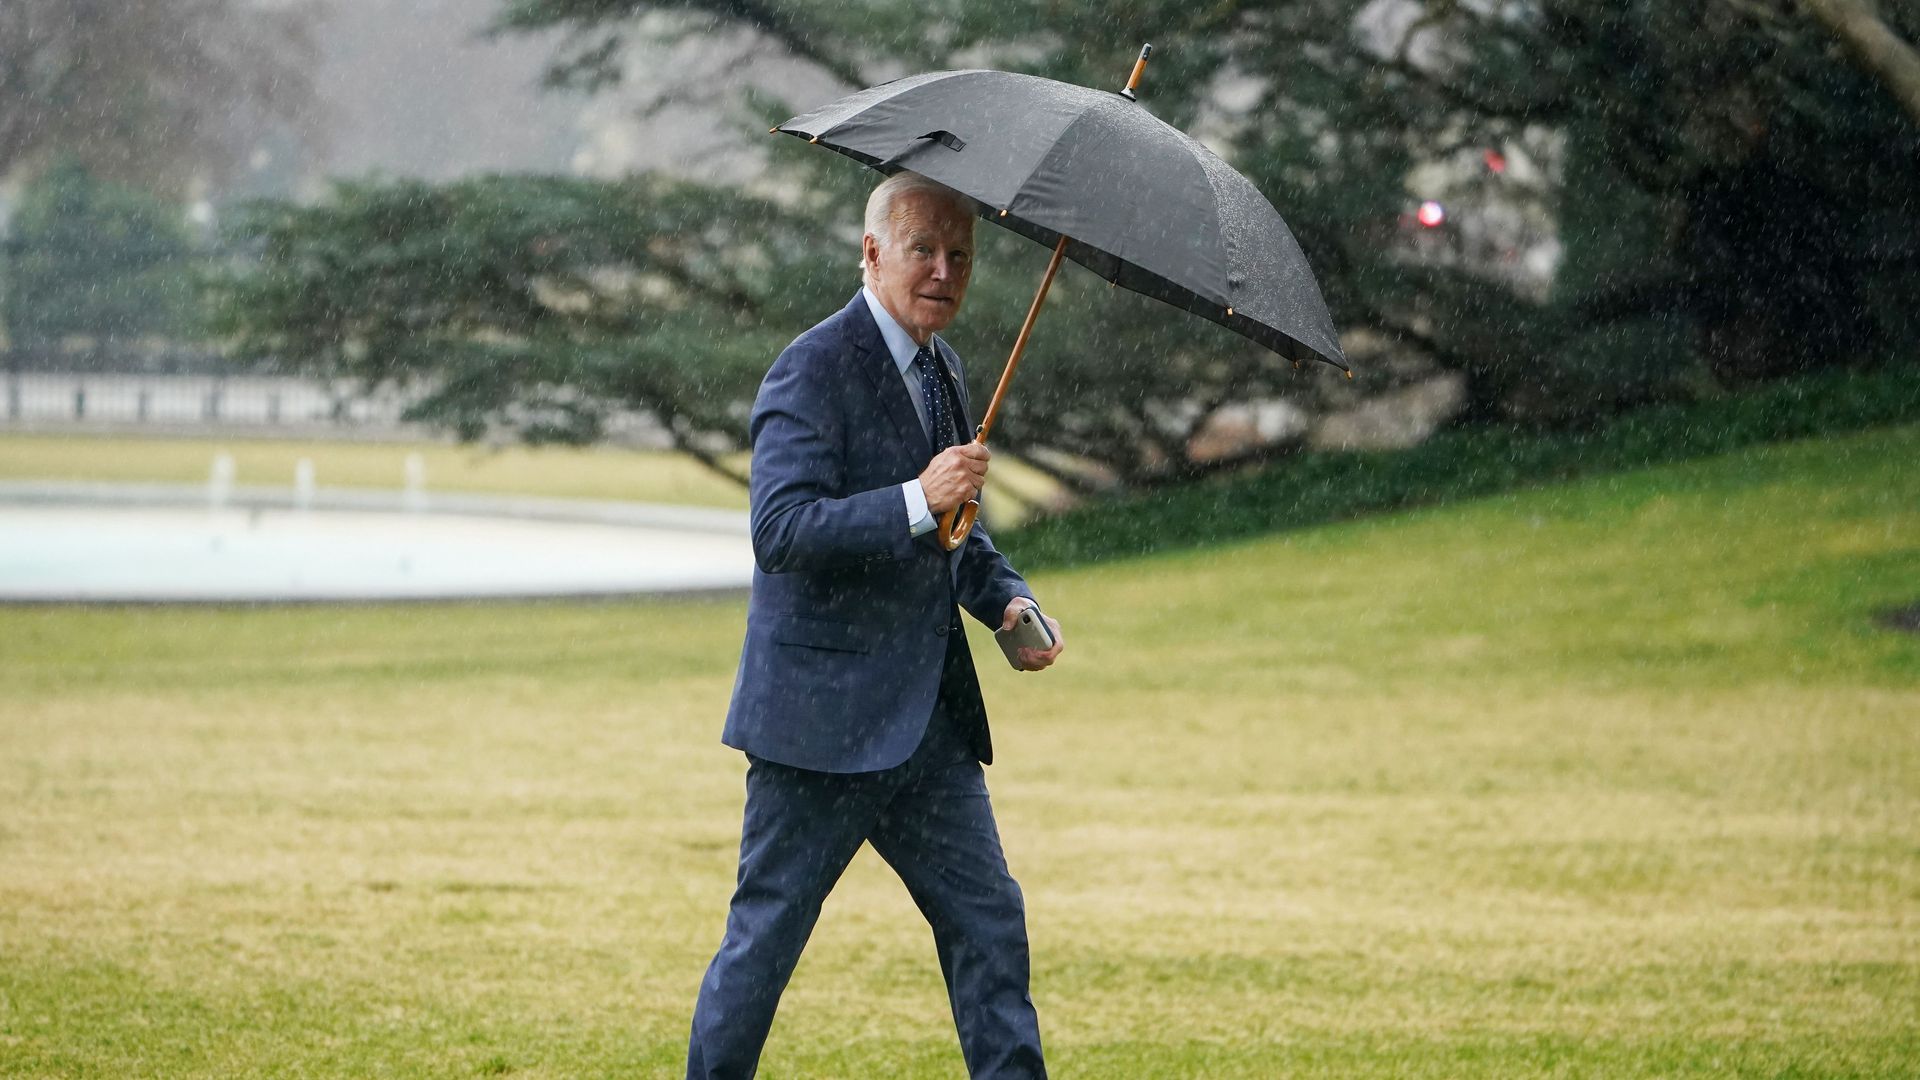 Biden carrying umbrella